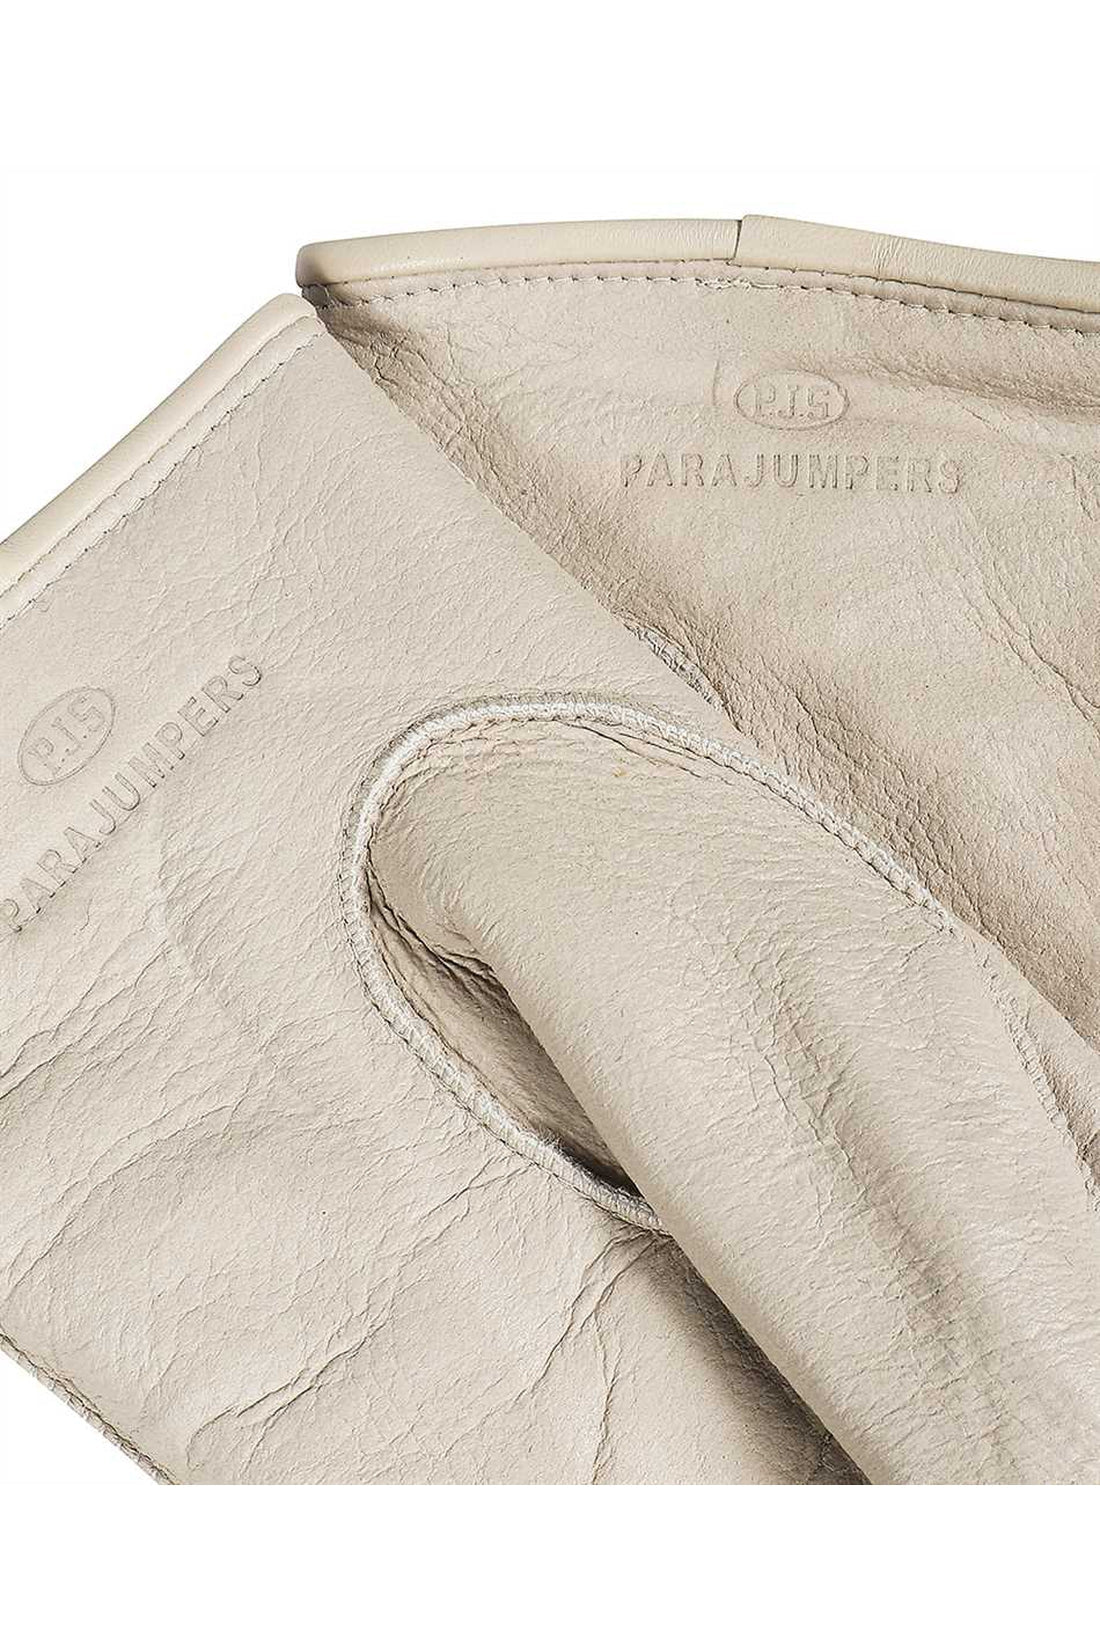 Parajumpers-OUTLET-SALE-Leather gloves-ARCHIVIST